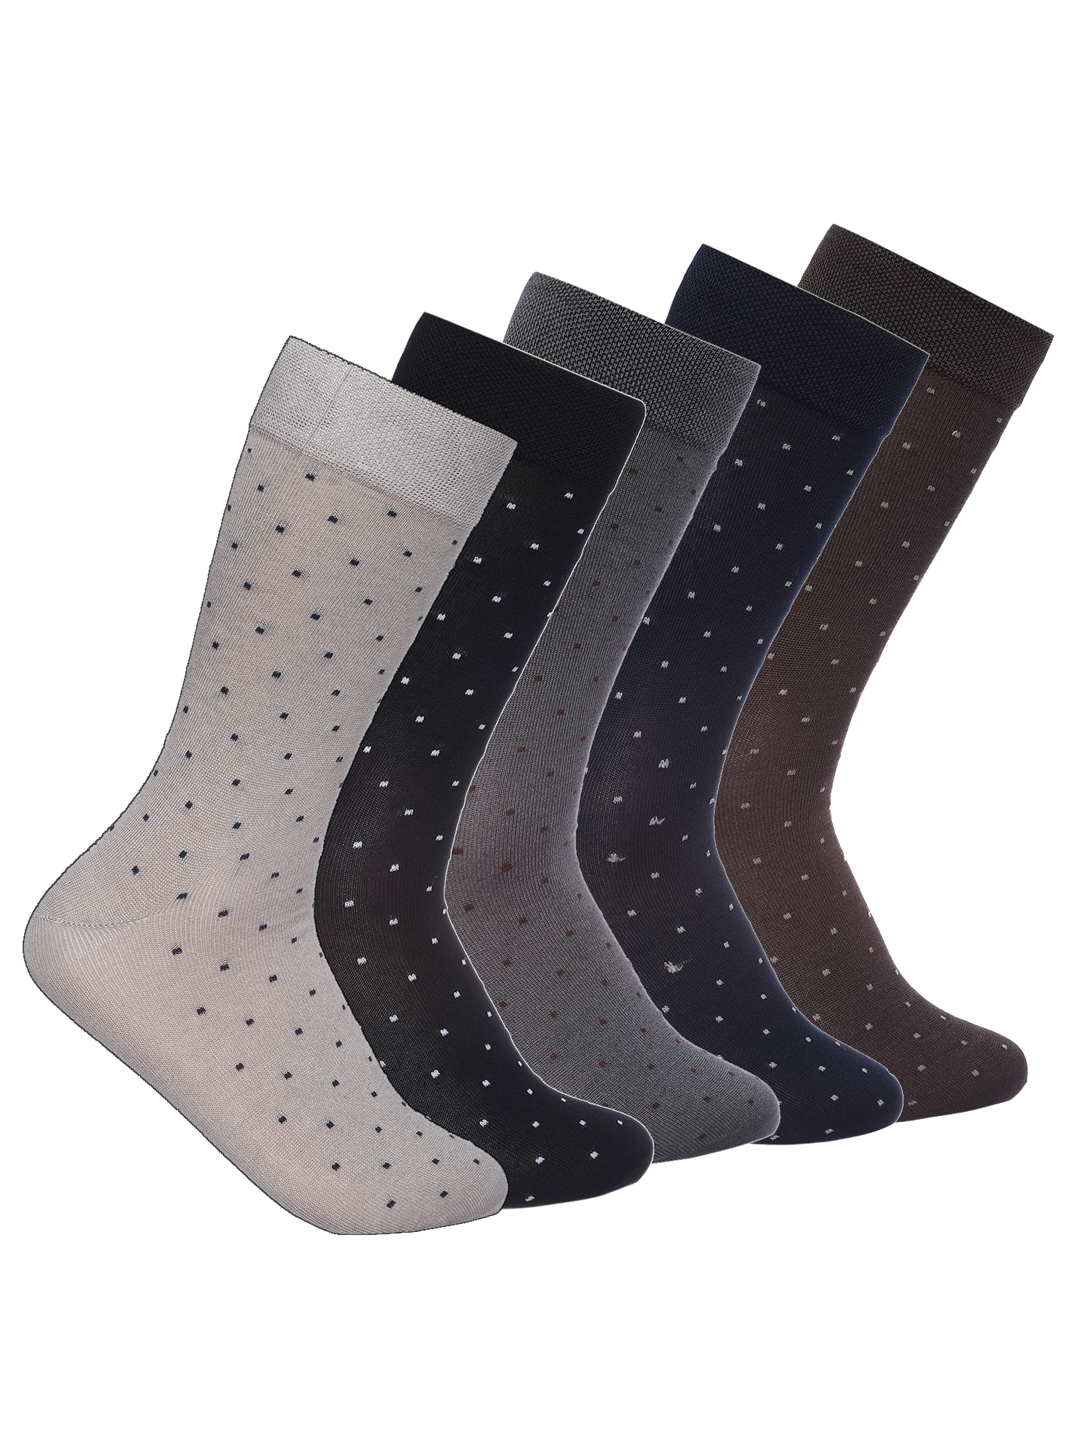 superfine allover motif mercerized cotton crew length socks